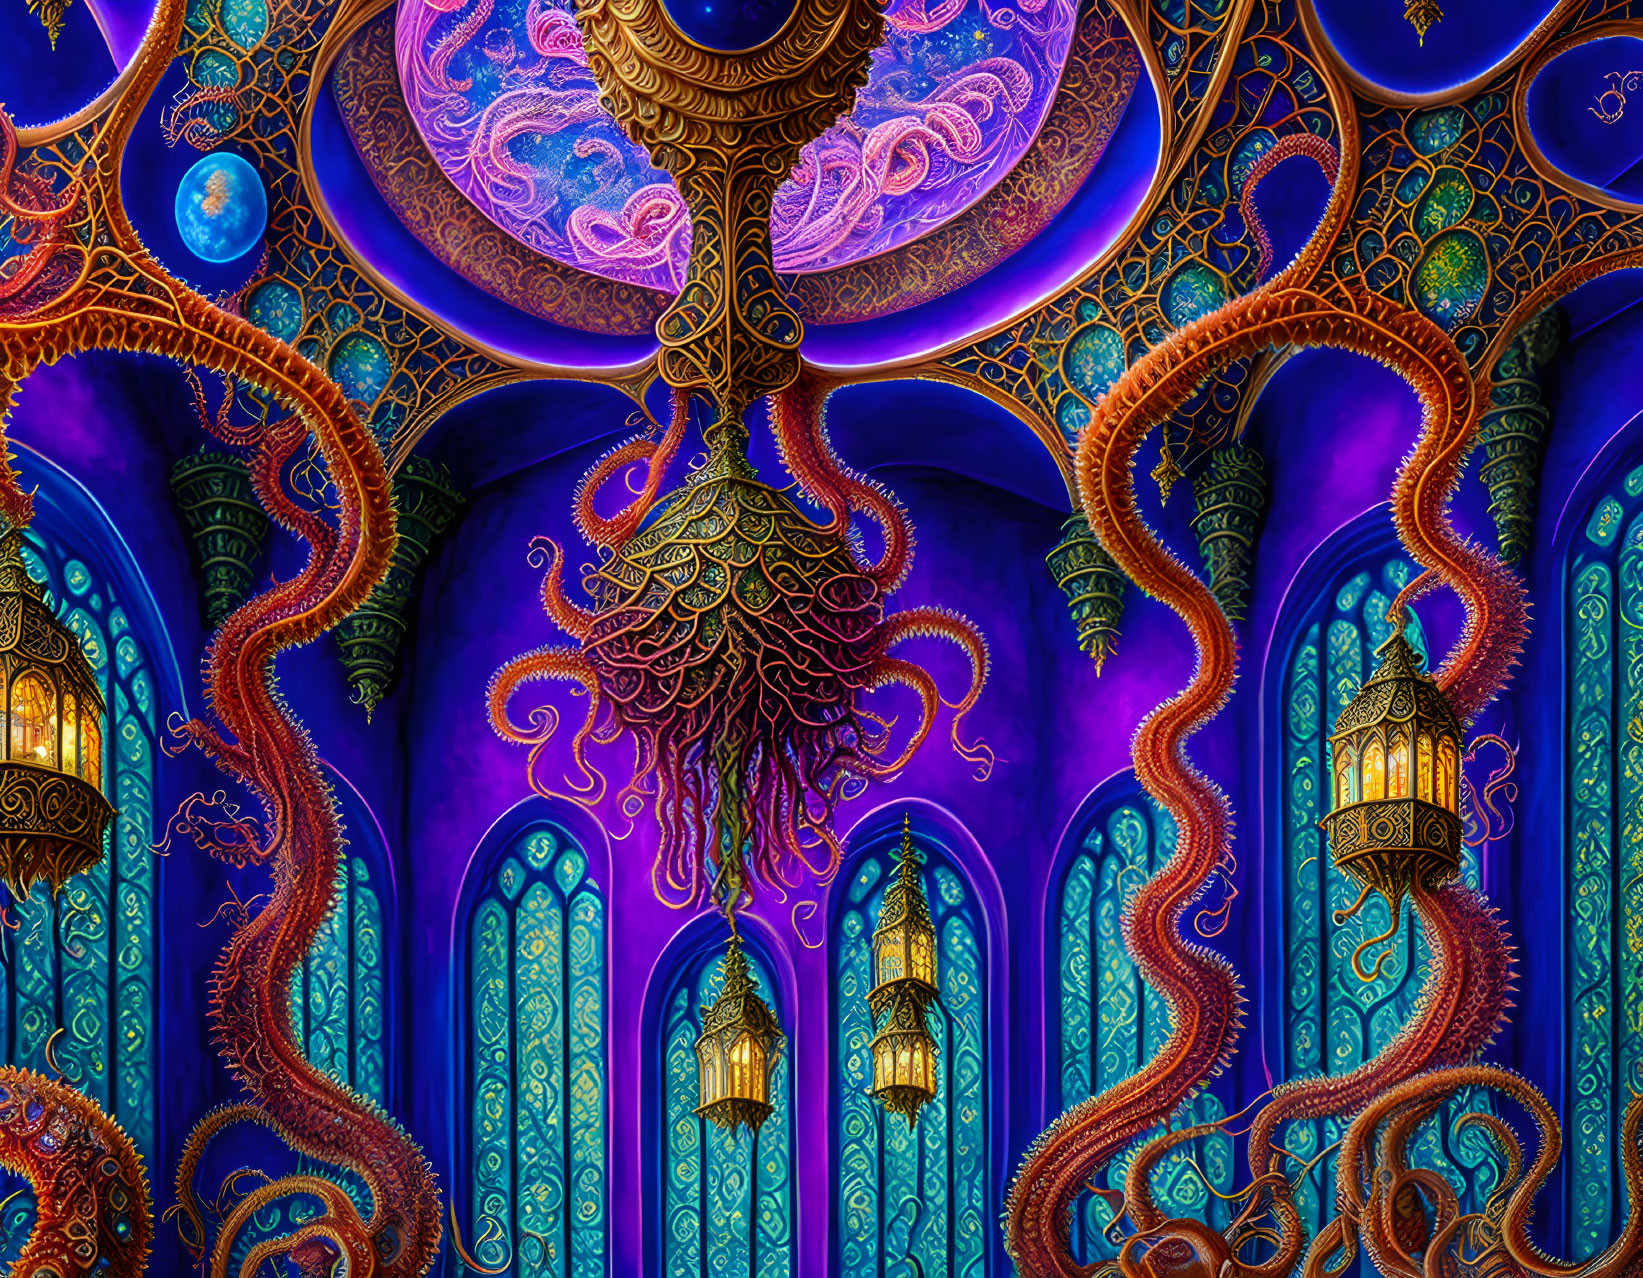 Fantasy artwork: Octopus chandelier, Gothic windows, cosmic ceiling